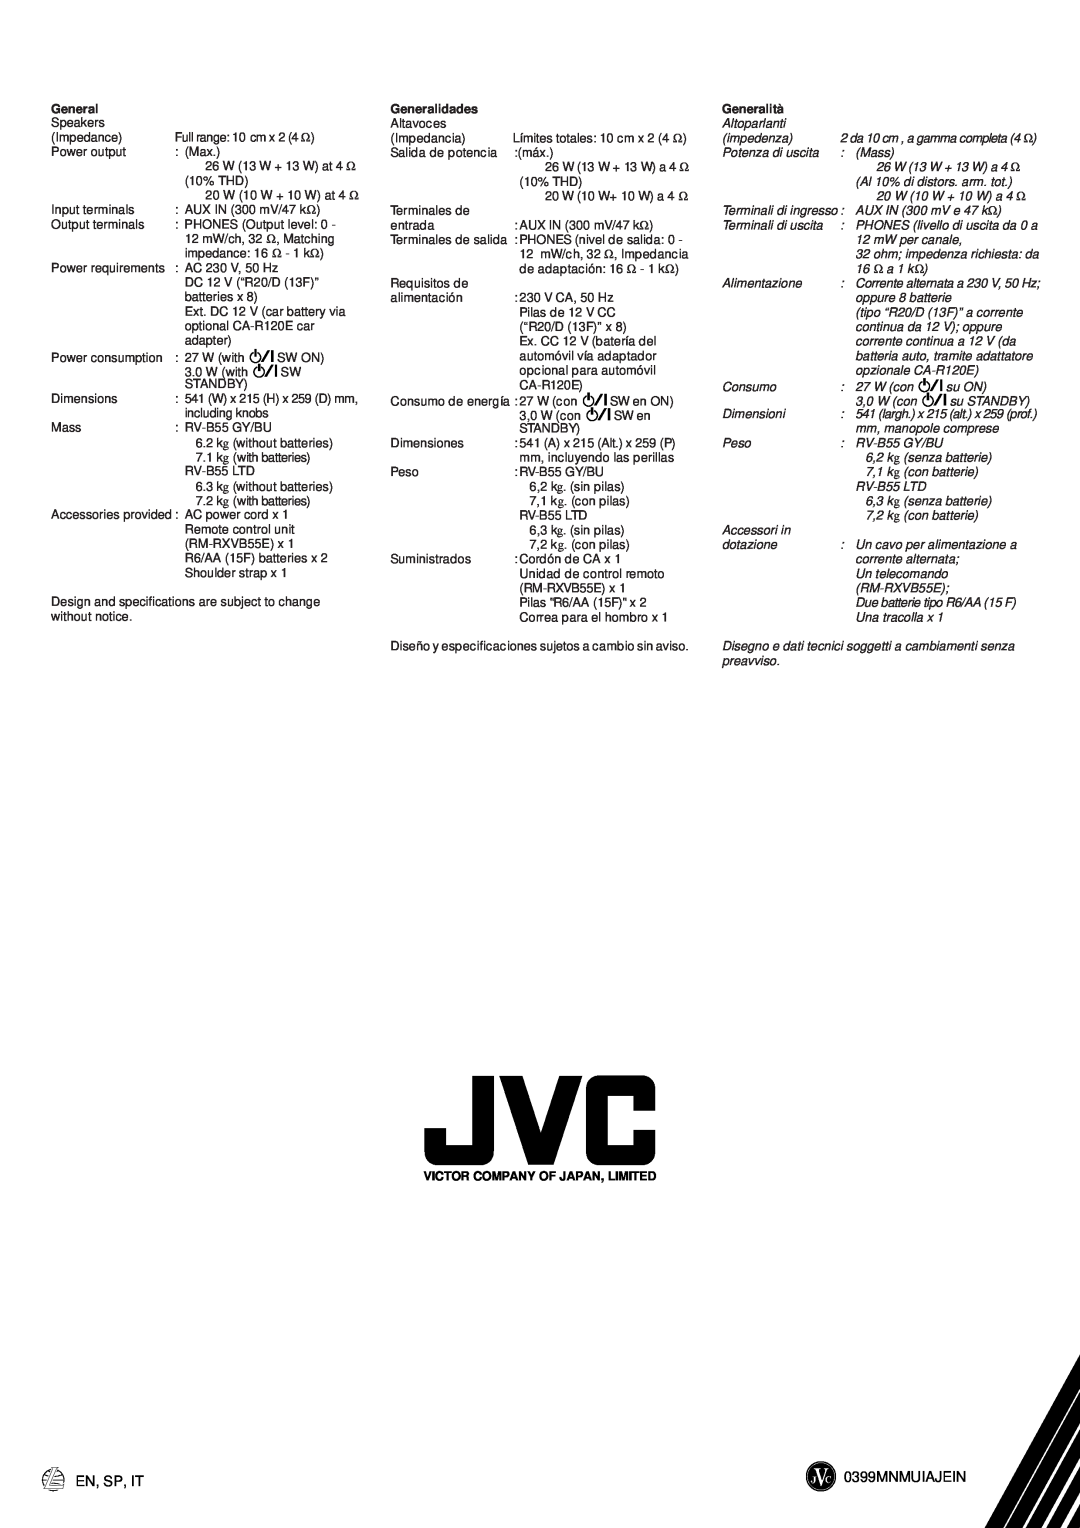 JVC RV-B55 GY/BU/LTD manual En, Sp, It, 0399MNMUIAJEIN, Generalidades, Victor Company Of Japan, Limited, Generalità 